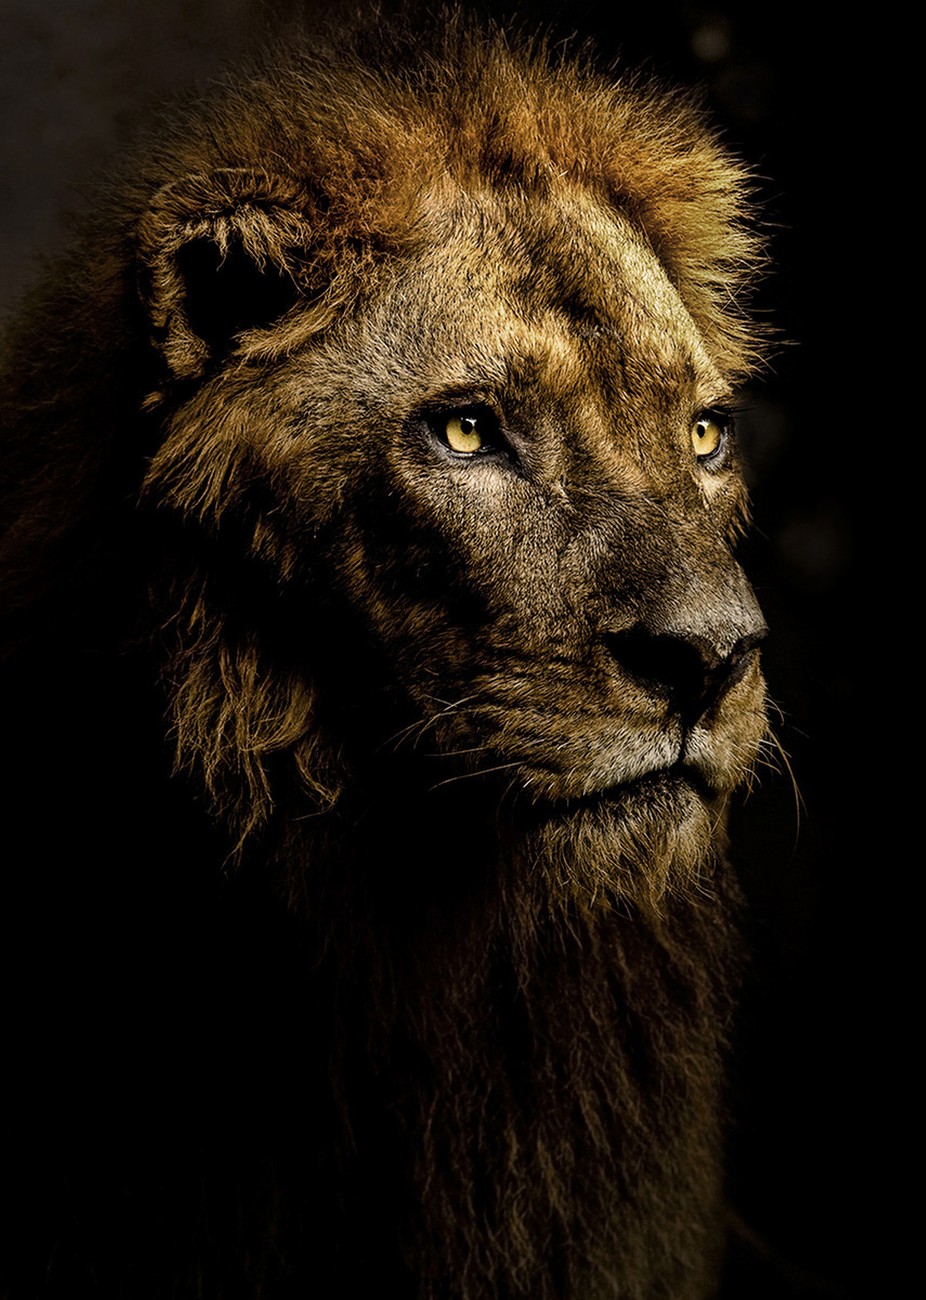 Lion in the Shadows by stephanieswartz - Wildlife Photo Contest 2017